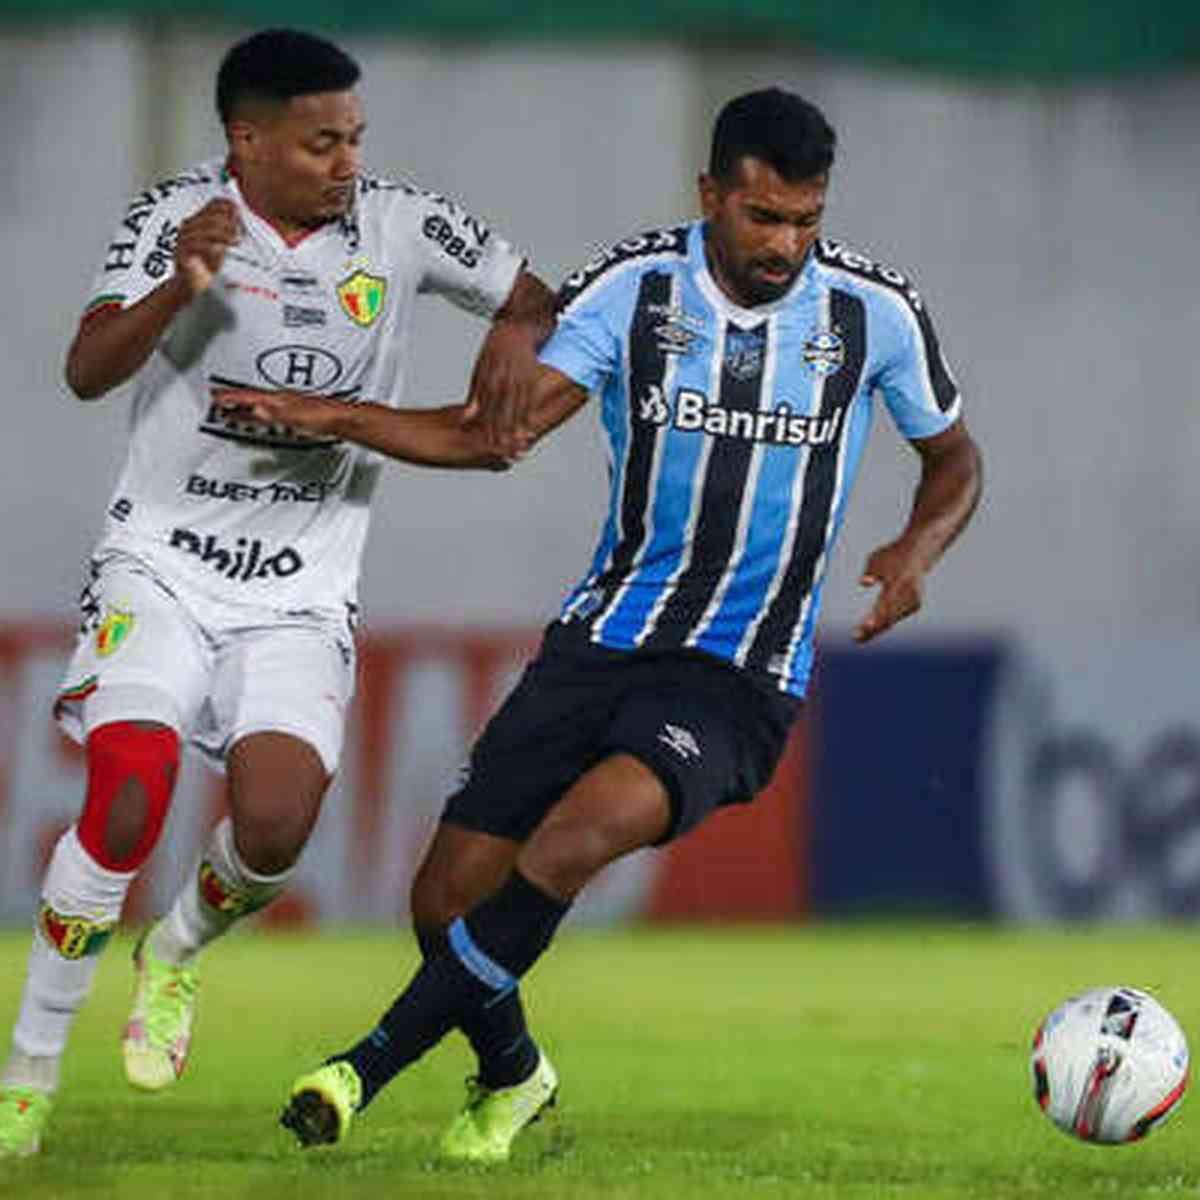 Ceará SC vs Tombense: A Clash of Determination